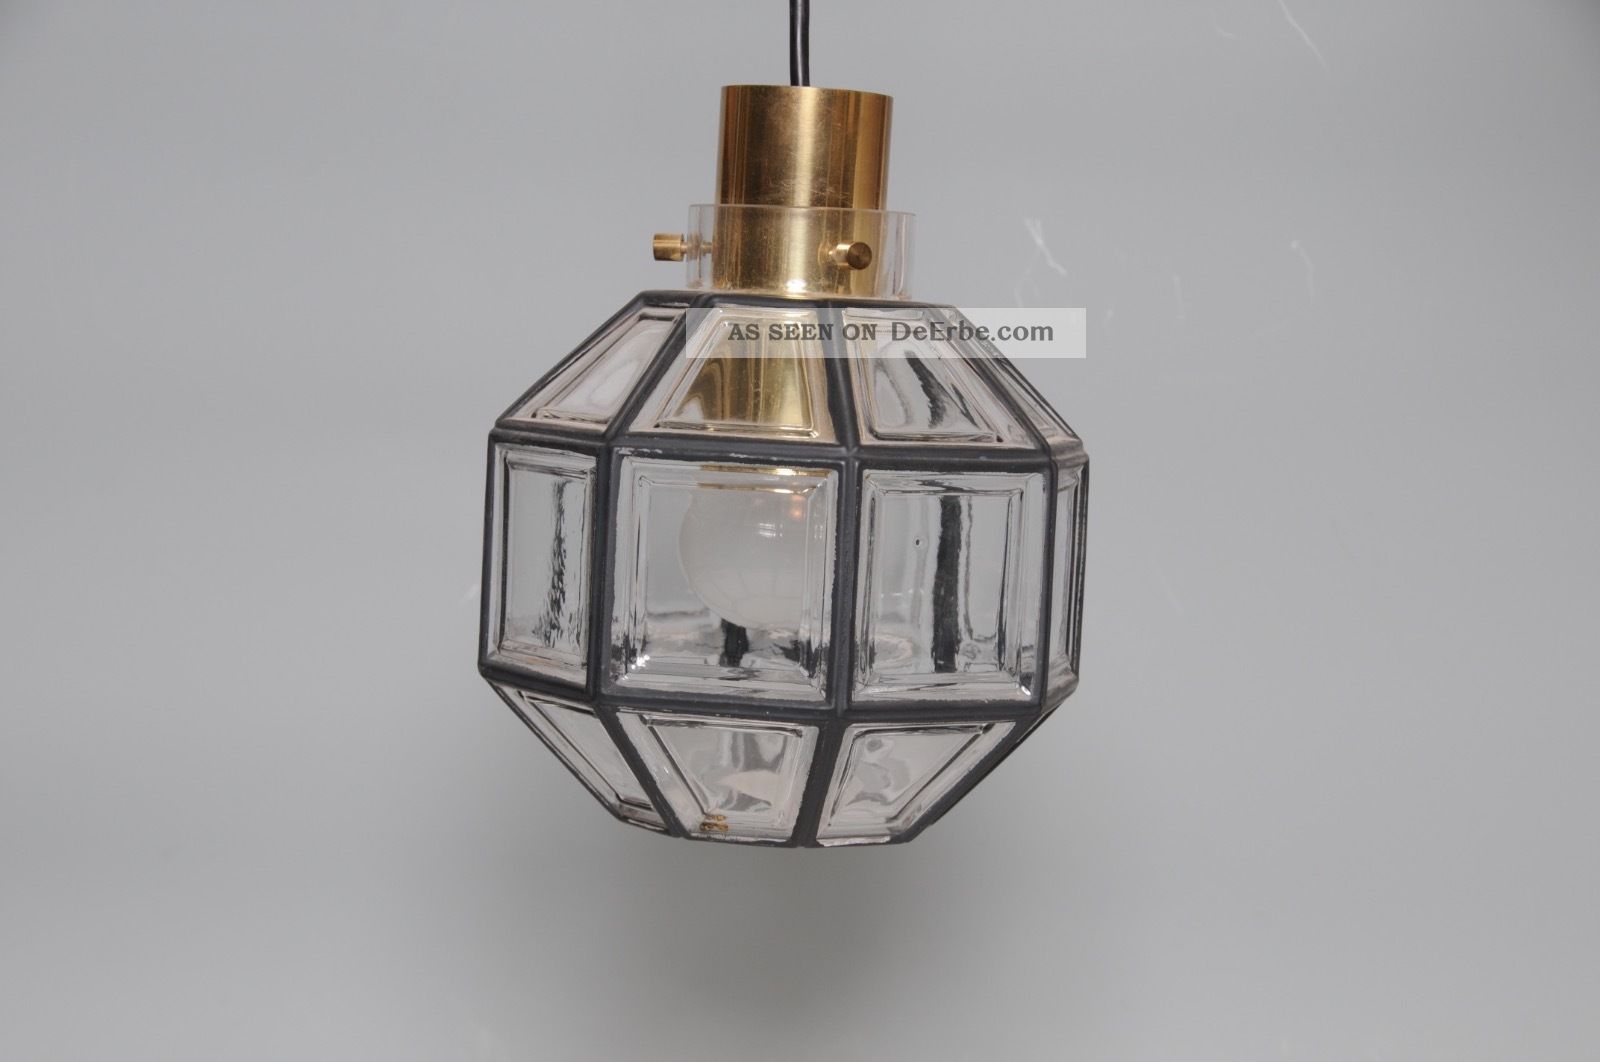 Limburg 70er Pendellampe HÄngelampe Design 70s Pendant Pendulum Lamp Panton Luce 1970-1979 Bild